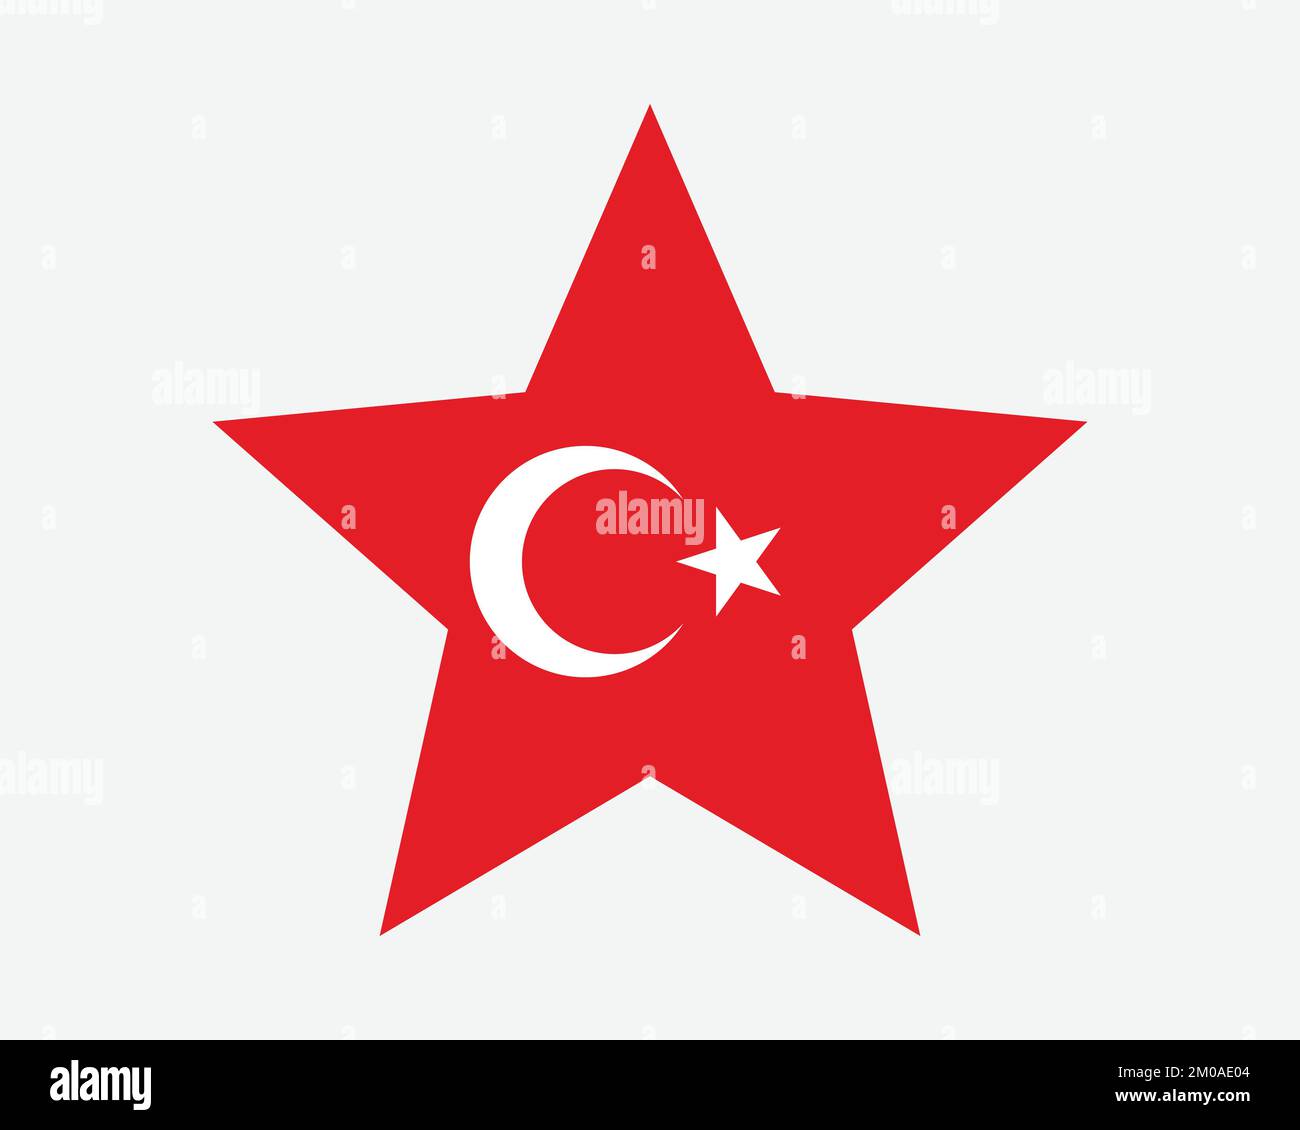 Turkey Star Flag. Republic of Türkiye Star Shape Flag. Turkish Turk Country National Banner Icon Symbol Vector Flat Artwork Graphic Illustration Stock Vector